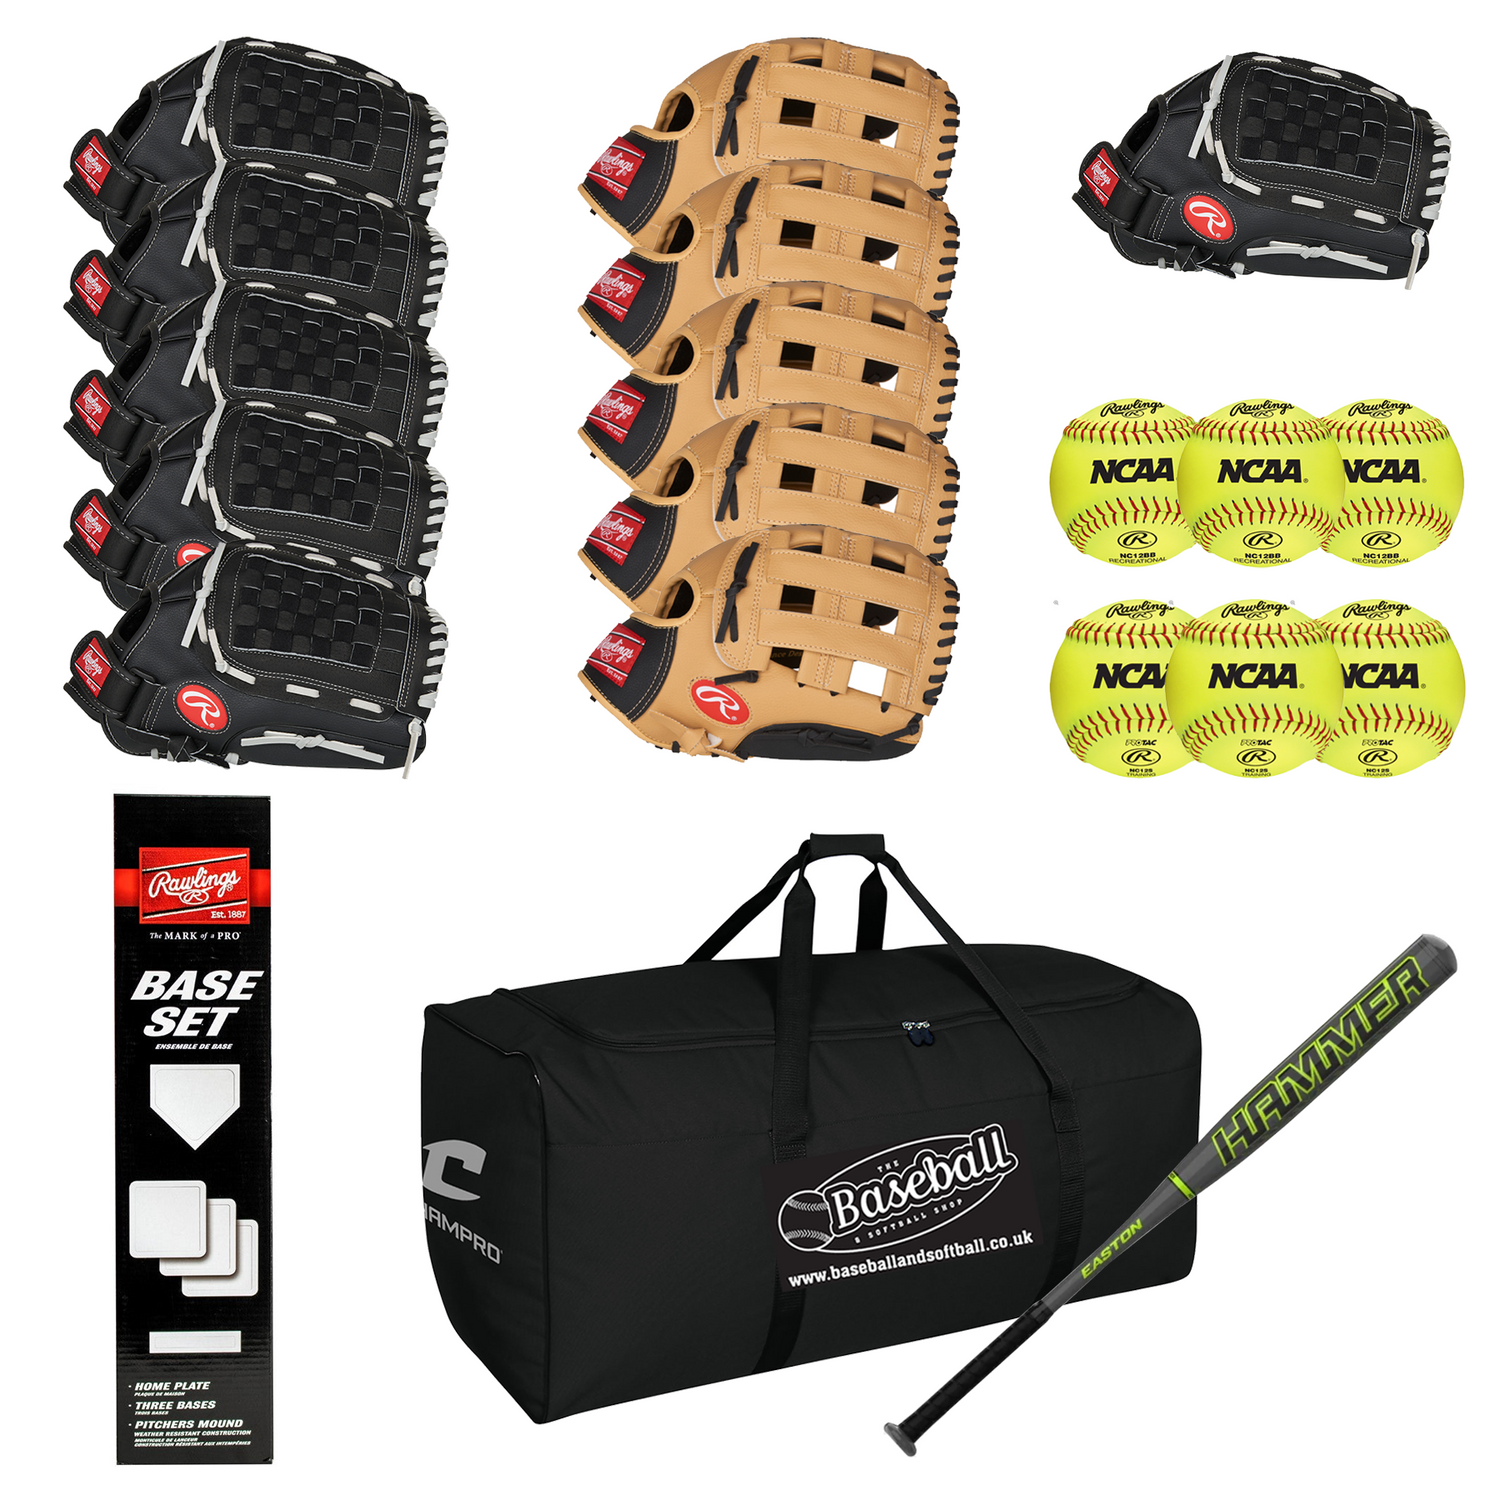 School Softball Kits